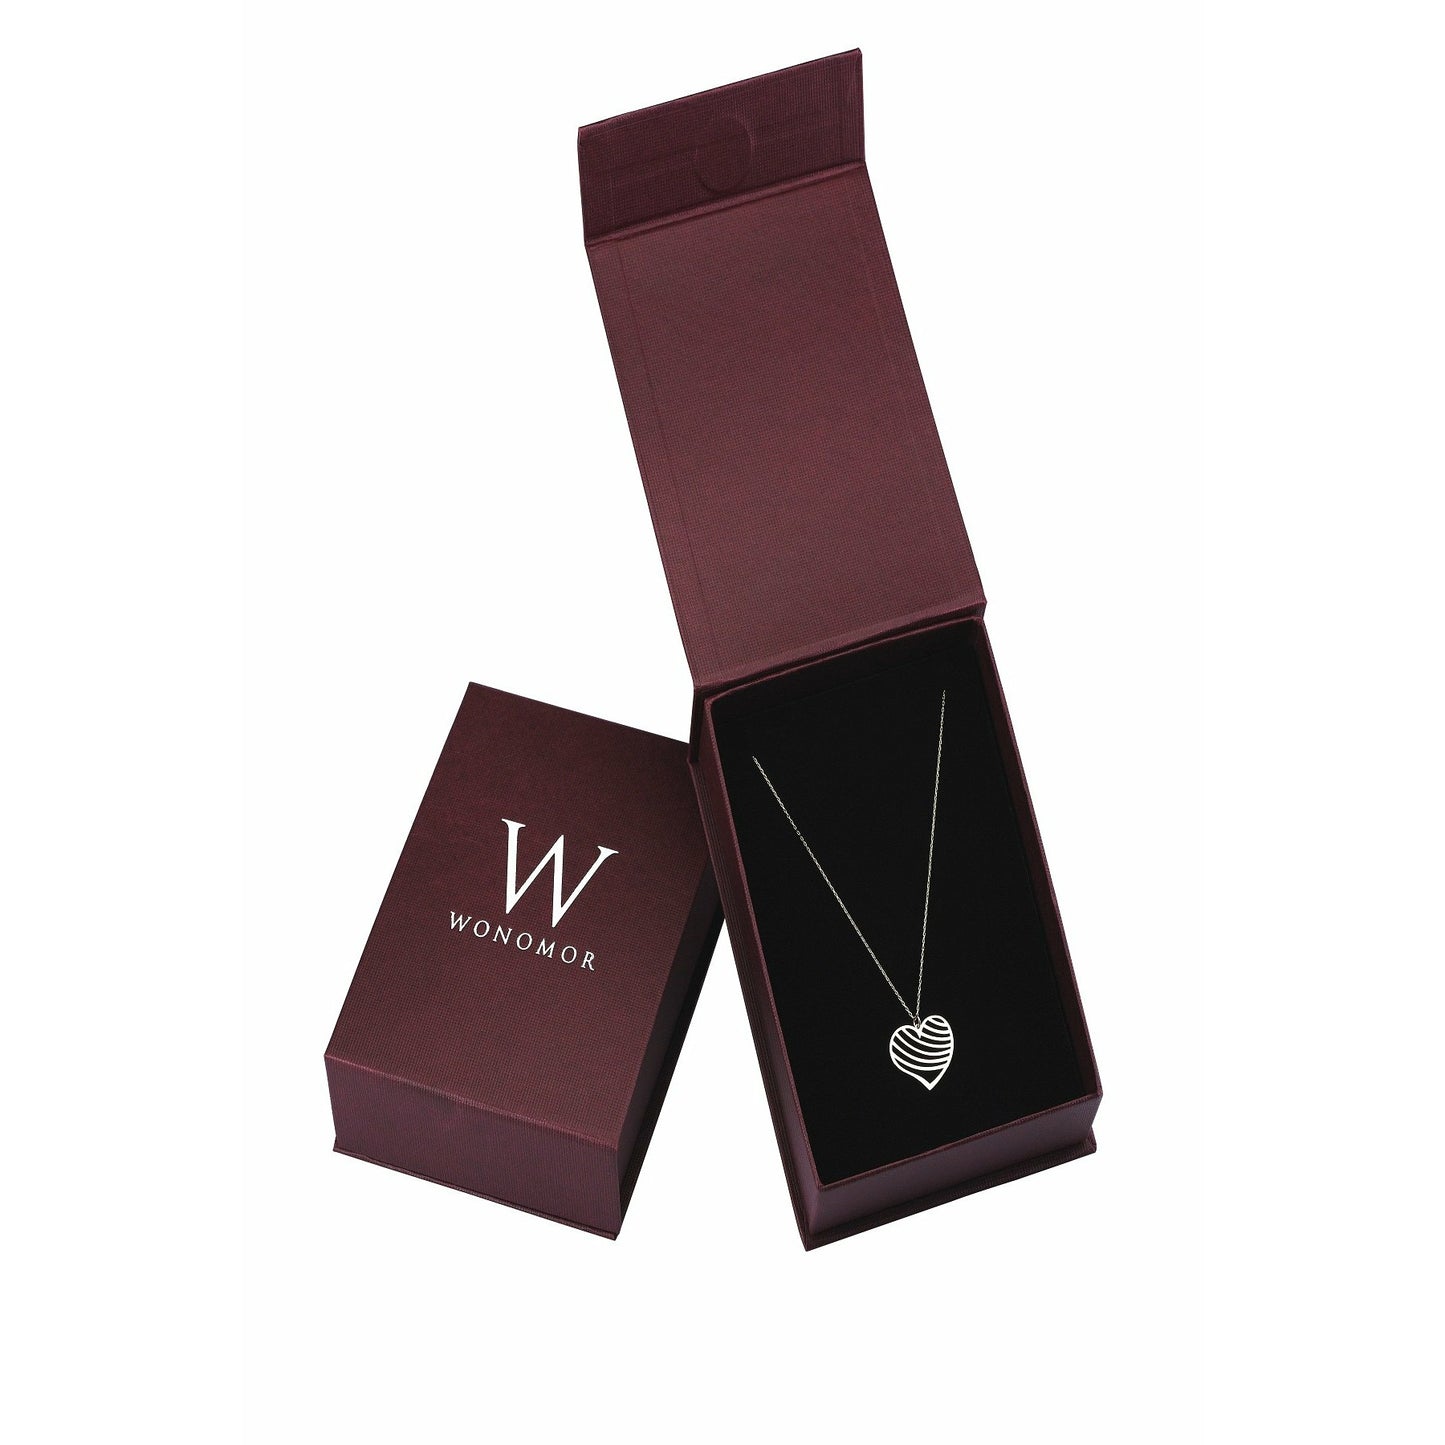 Special Design Gift 14k Gold Patterned Heart Necklace 